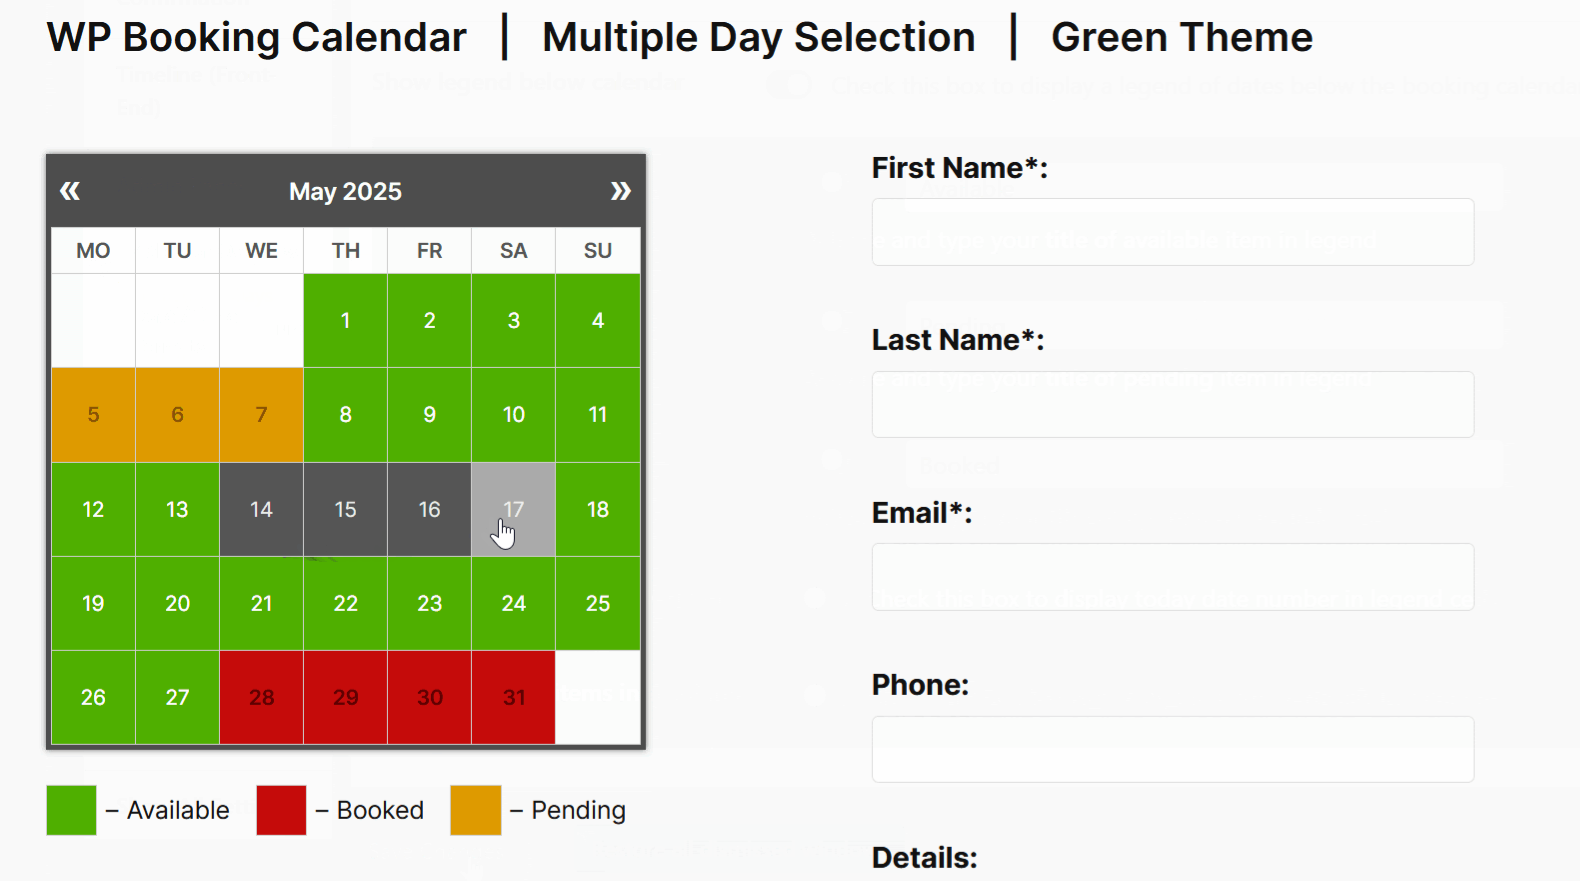 WP Booking Calendar interface